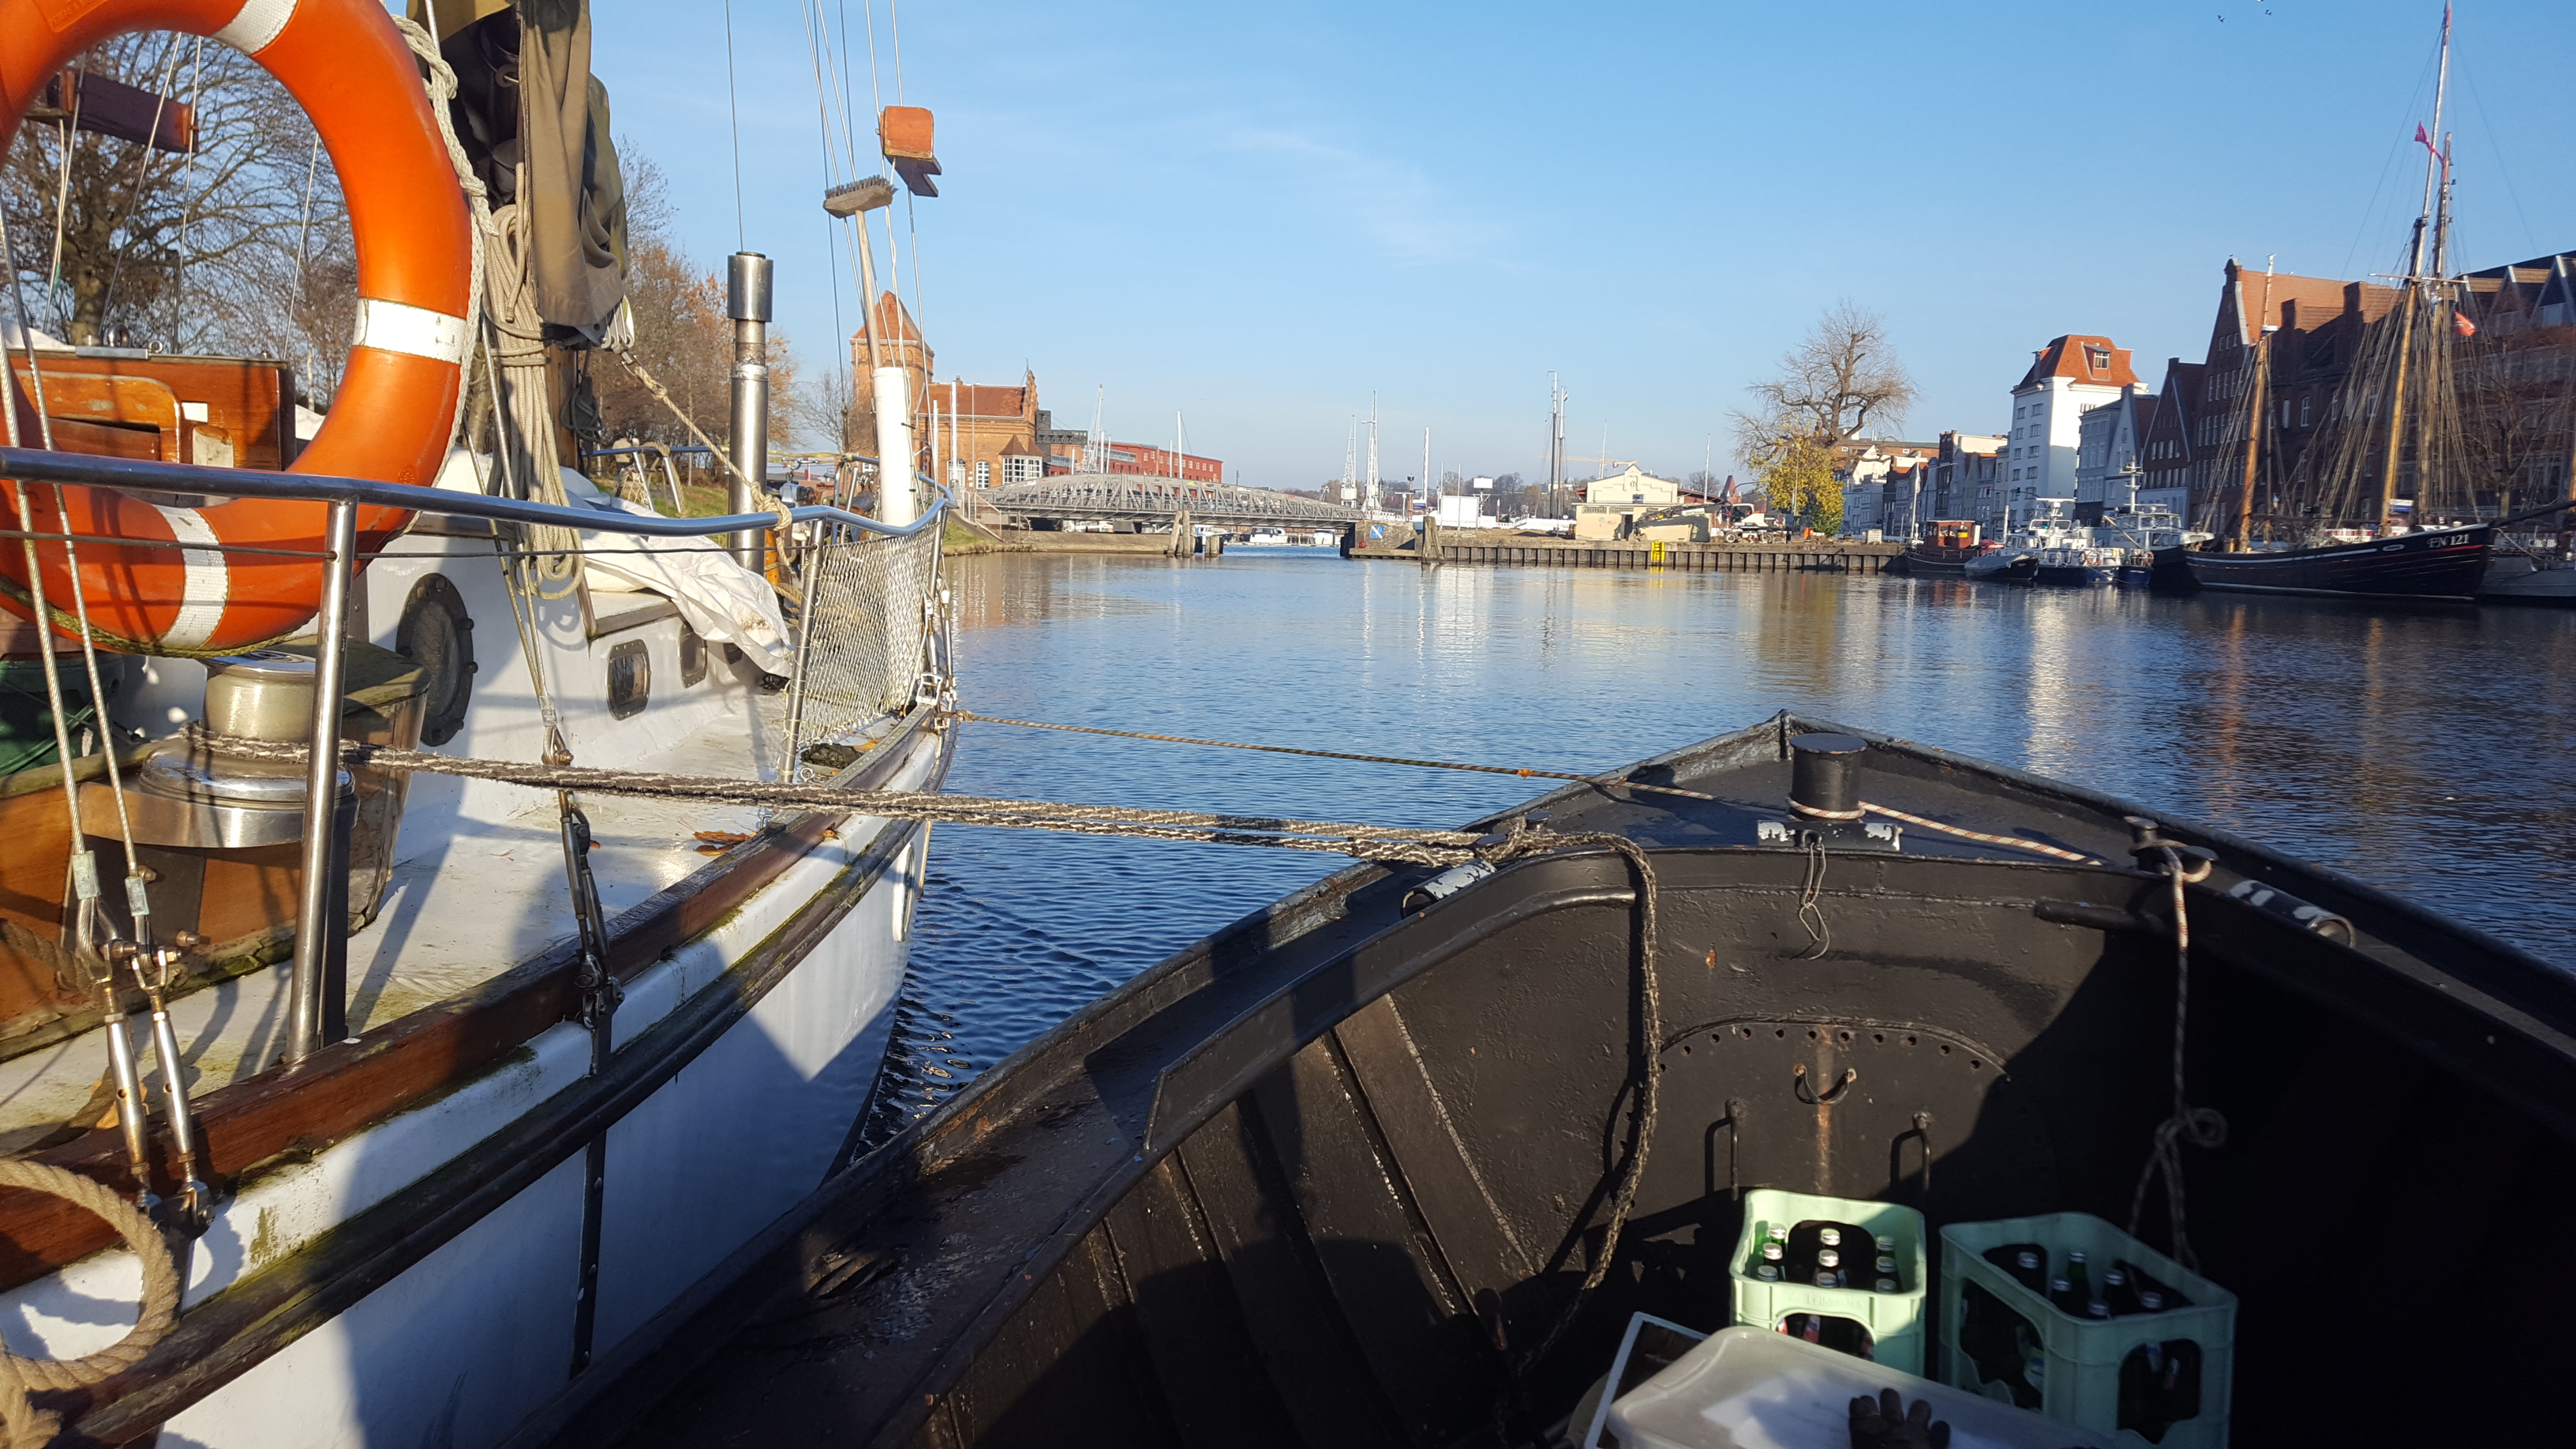 A winterly trip to the shipyard in Rødbyhavn